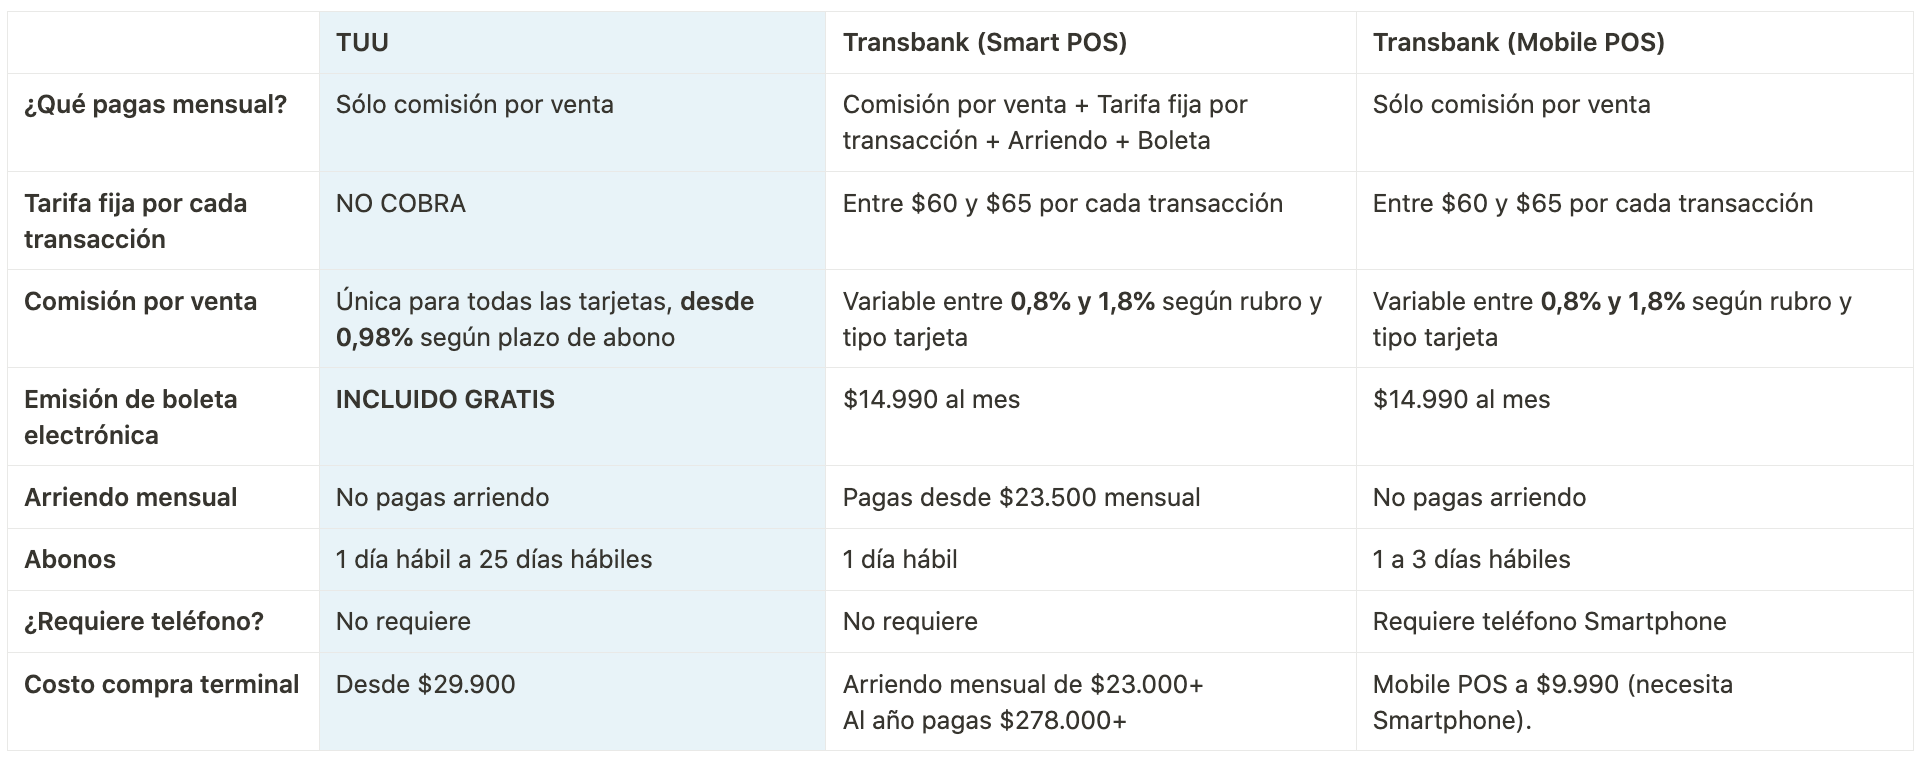 Tabla comparativa TUU vs Transbank